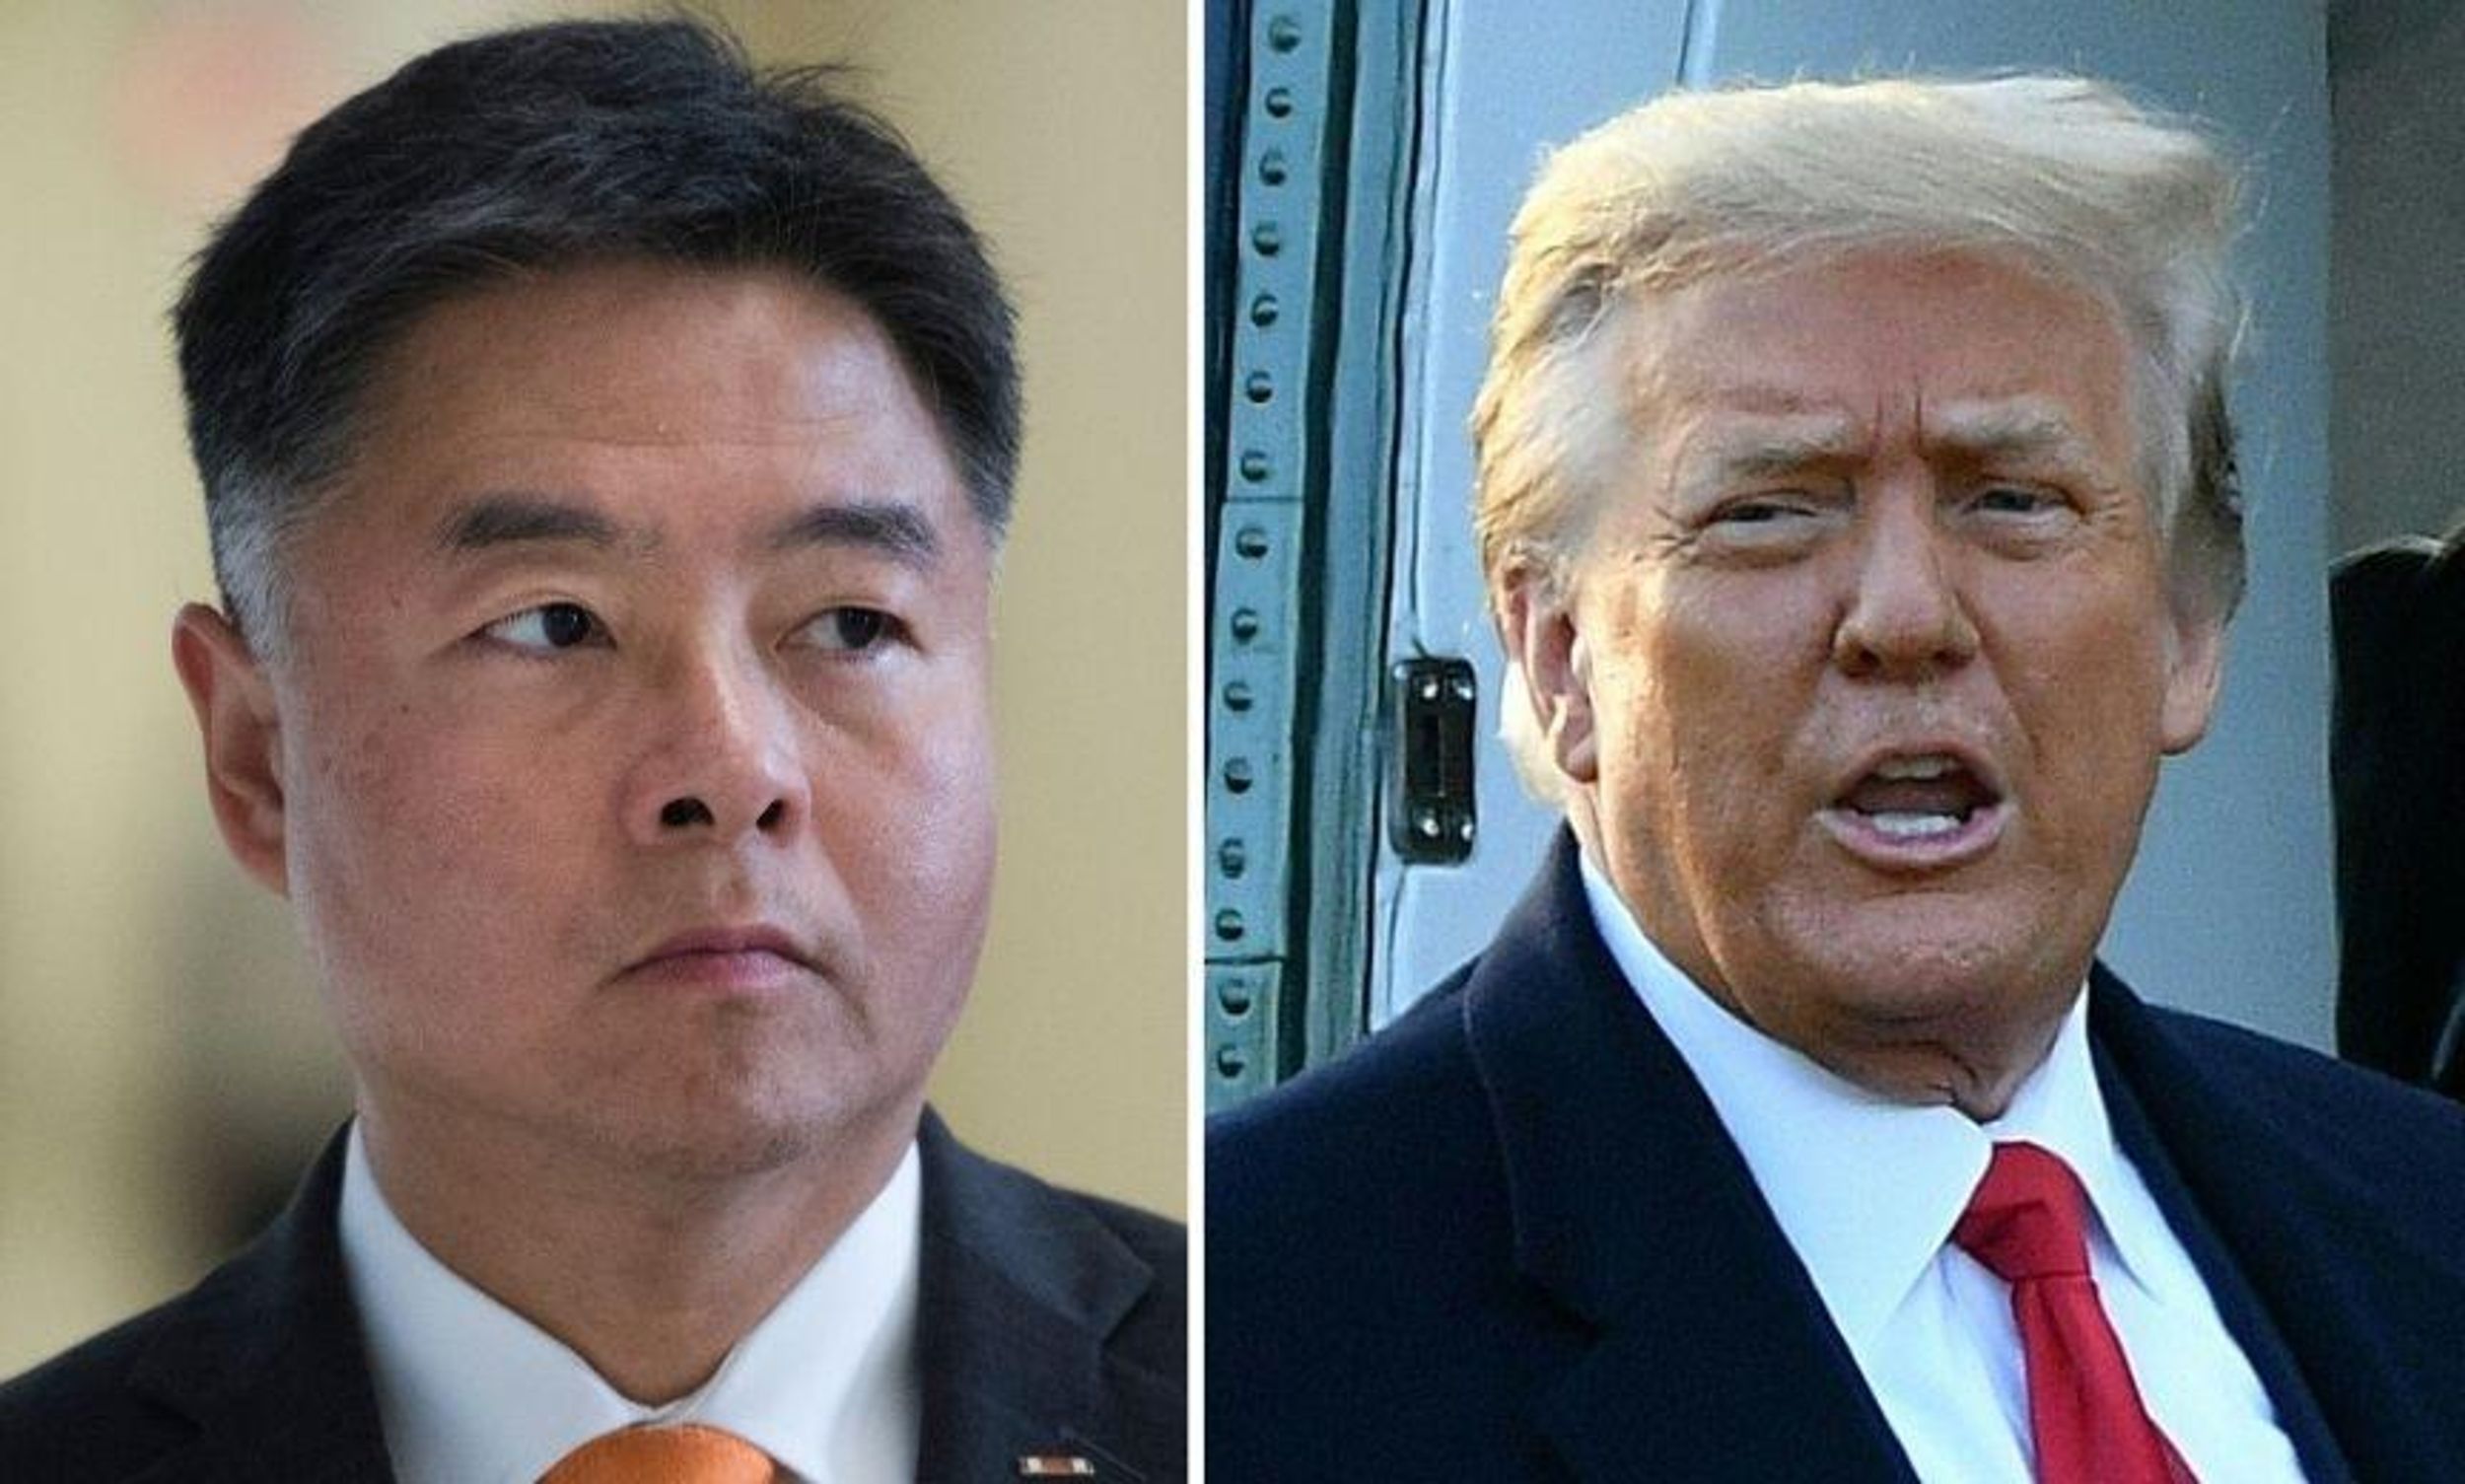 Rep. Lieu Calls out Trump's Anti-Asian Rhetoric after Shooter Kills Six Asian Women in Atlanta